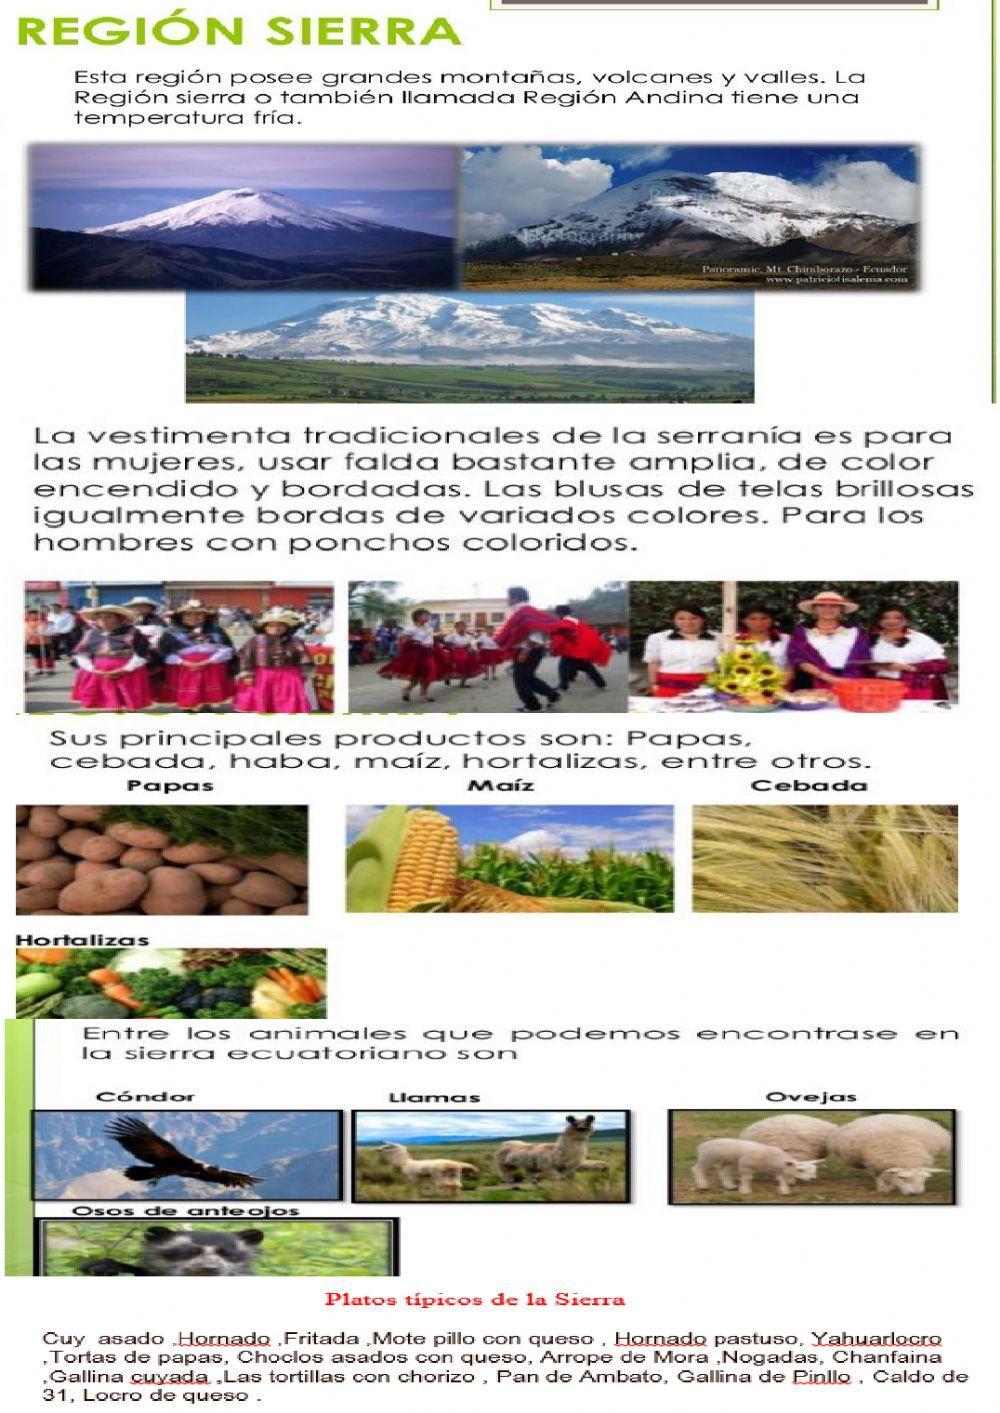 Regiones naturales del ECUADOR